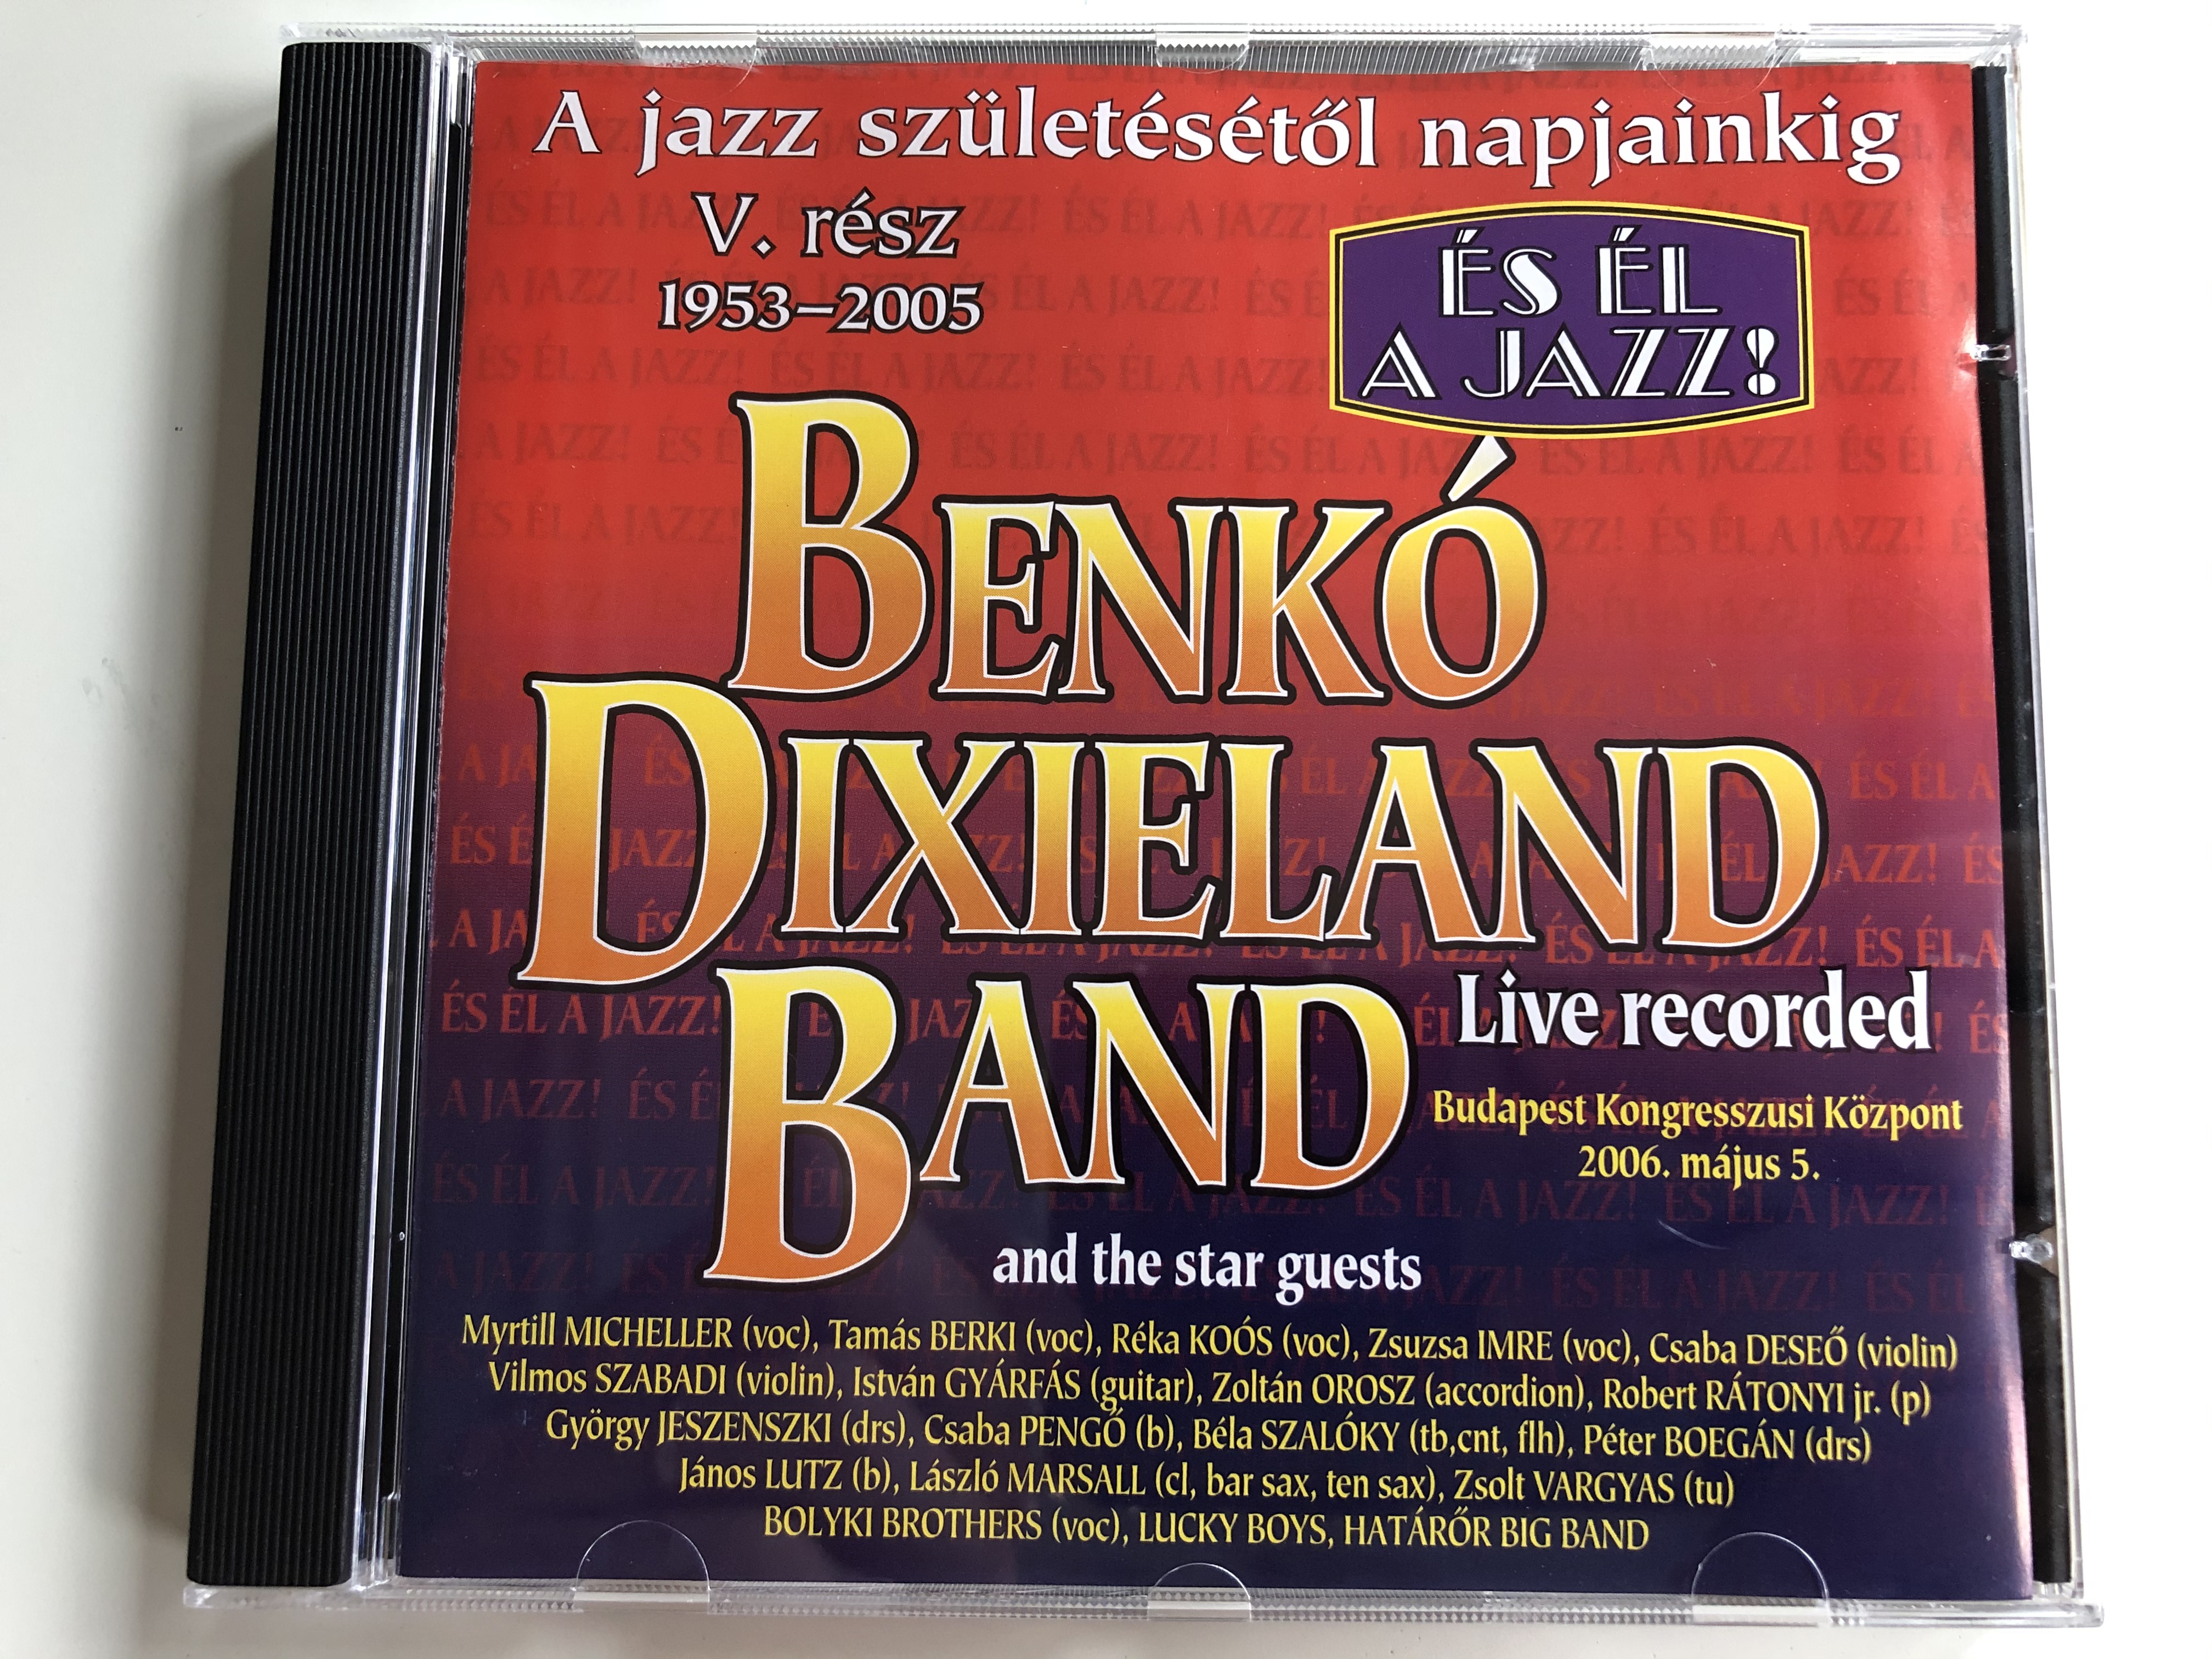 benk-dixieland-band-and-the-star-guestst-es-el-a-jazz-live-recorded-budapest-kongreszusi-kozpont-2006.-majus-5.-a-jazz-szuletesetol-napjainkig-myrtill-micheller-voc-tamas-berki-voc-1-.jpg